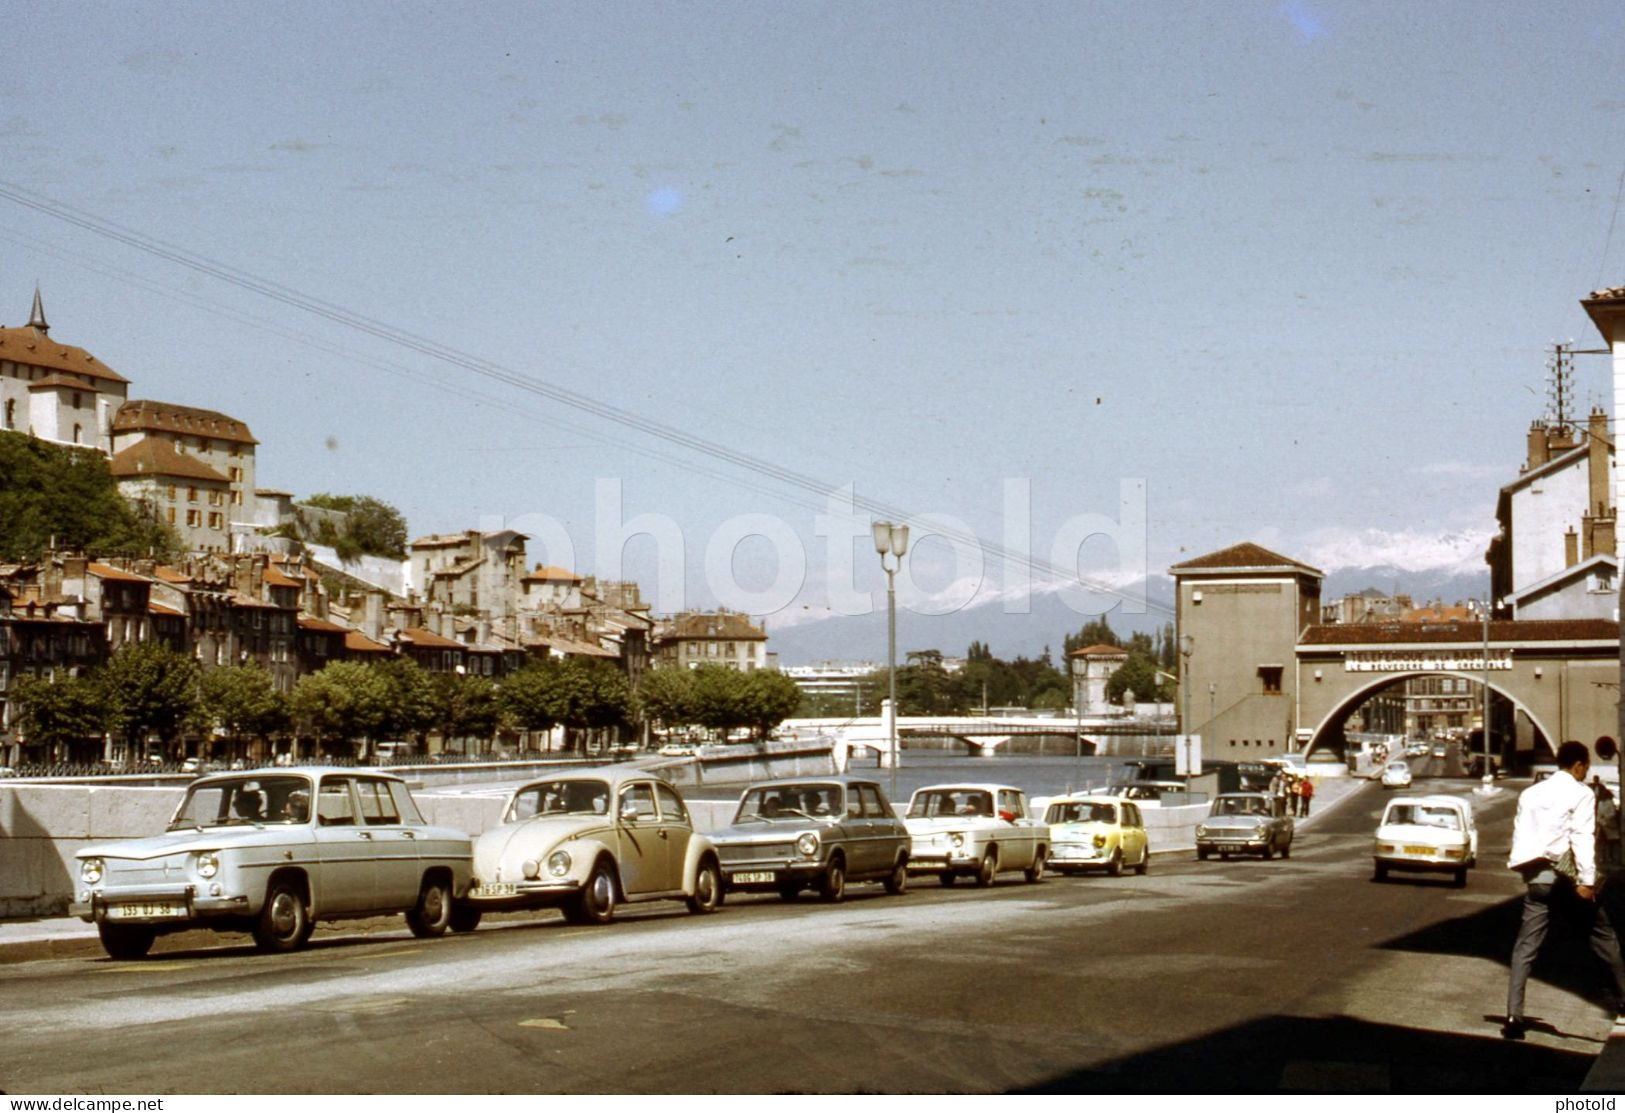 1970 GRENOBLE TELEPHERIQUE RENAULT SIMCA PEUGEOT VW MINI FRANCE 35mm SLIDE PHOTO FOTO NB4165 - Diapositives (slides)